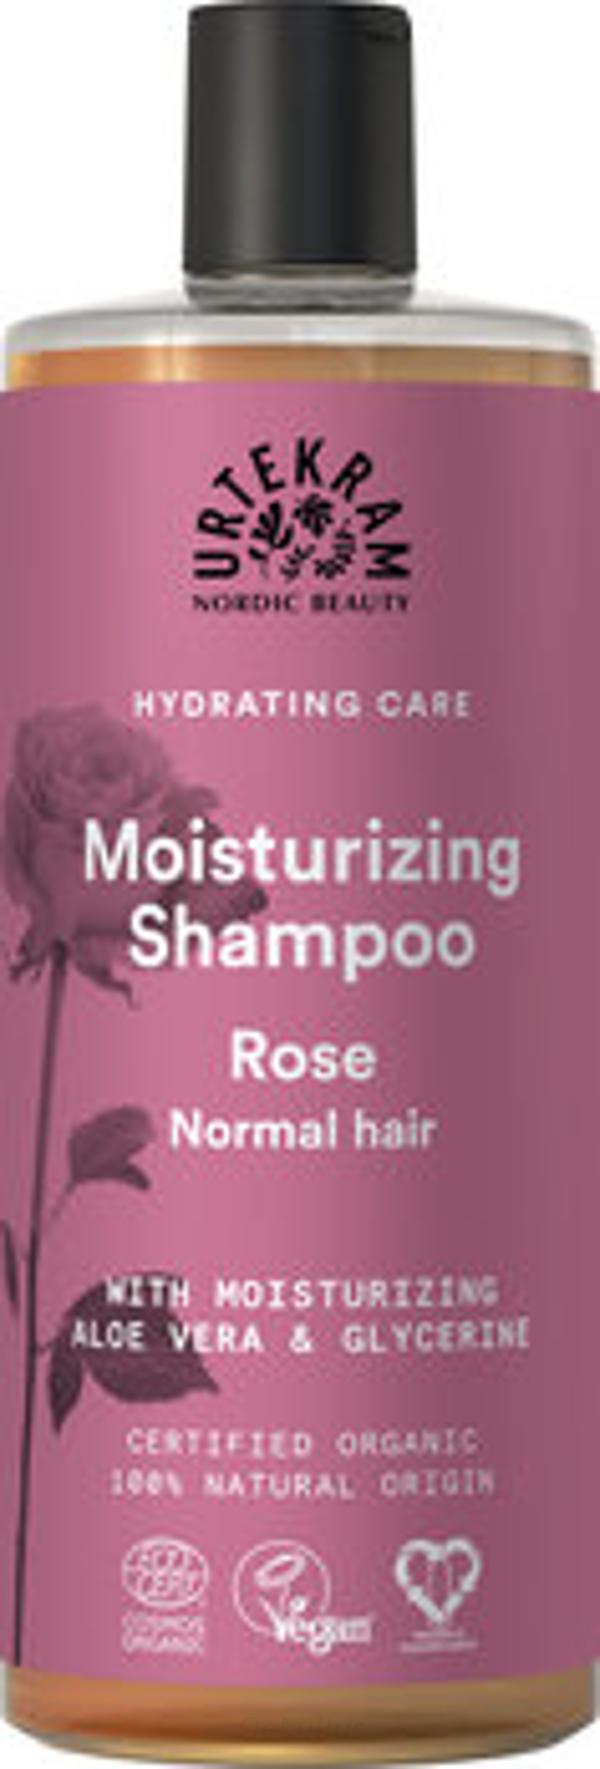 Produktfoto zu Rose Shampoo 500ml